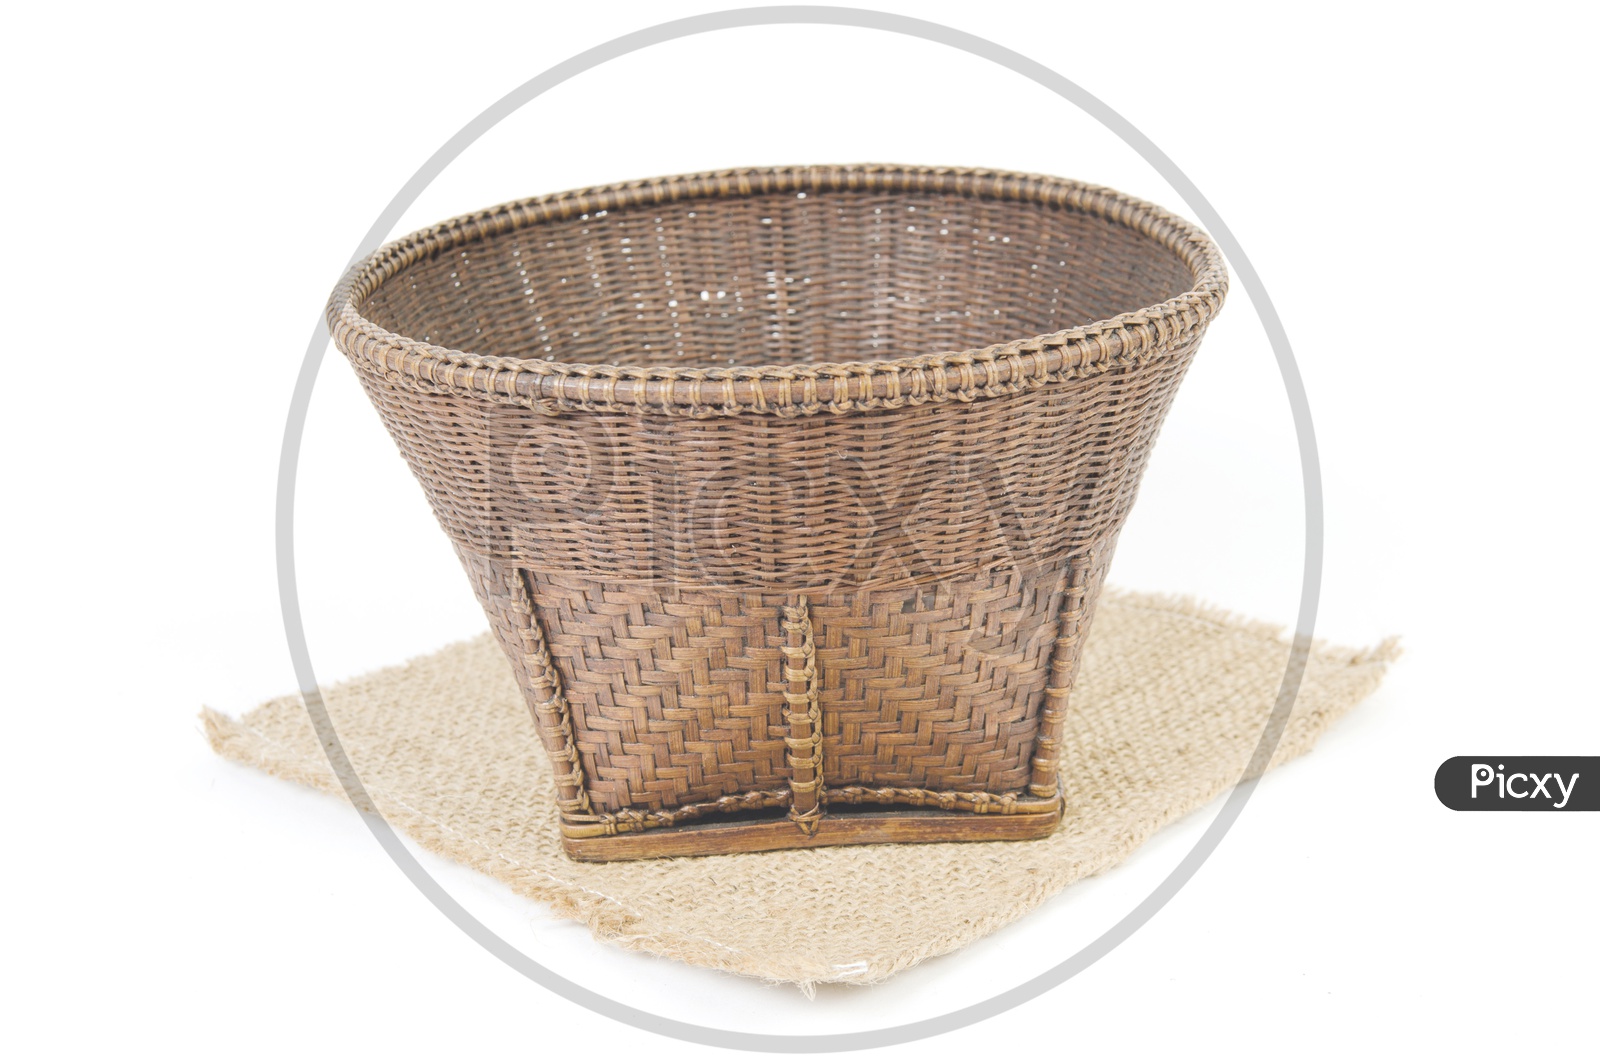 Empty Hand weaved Wooden Basket on White Background